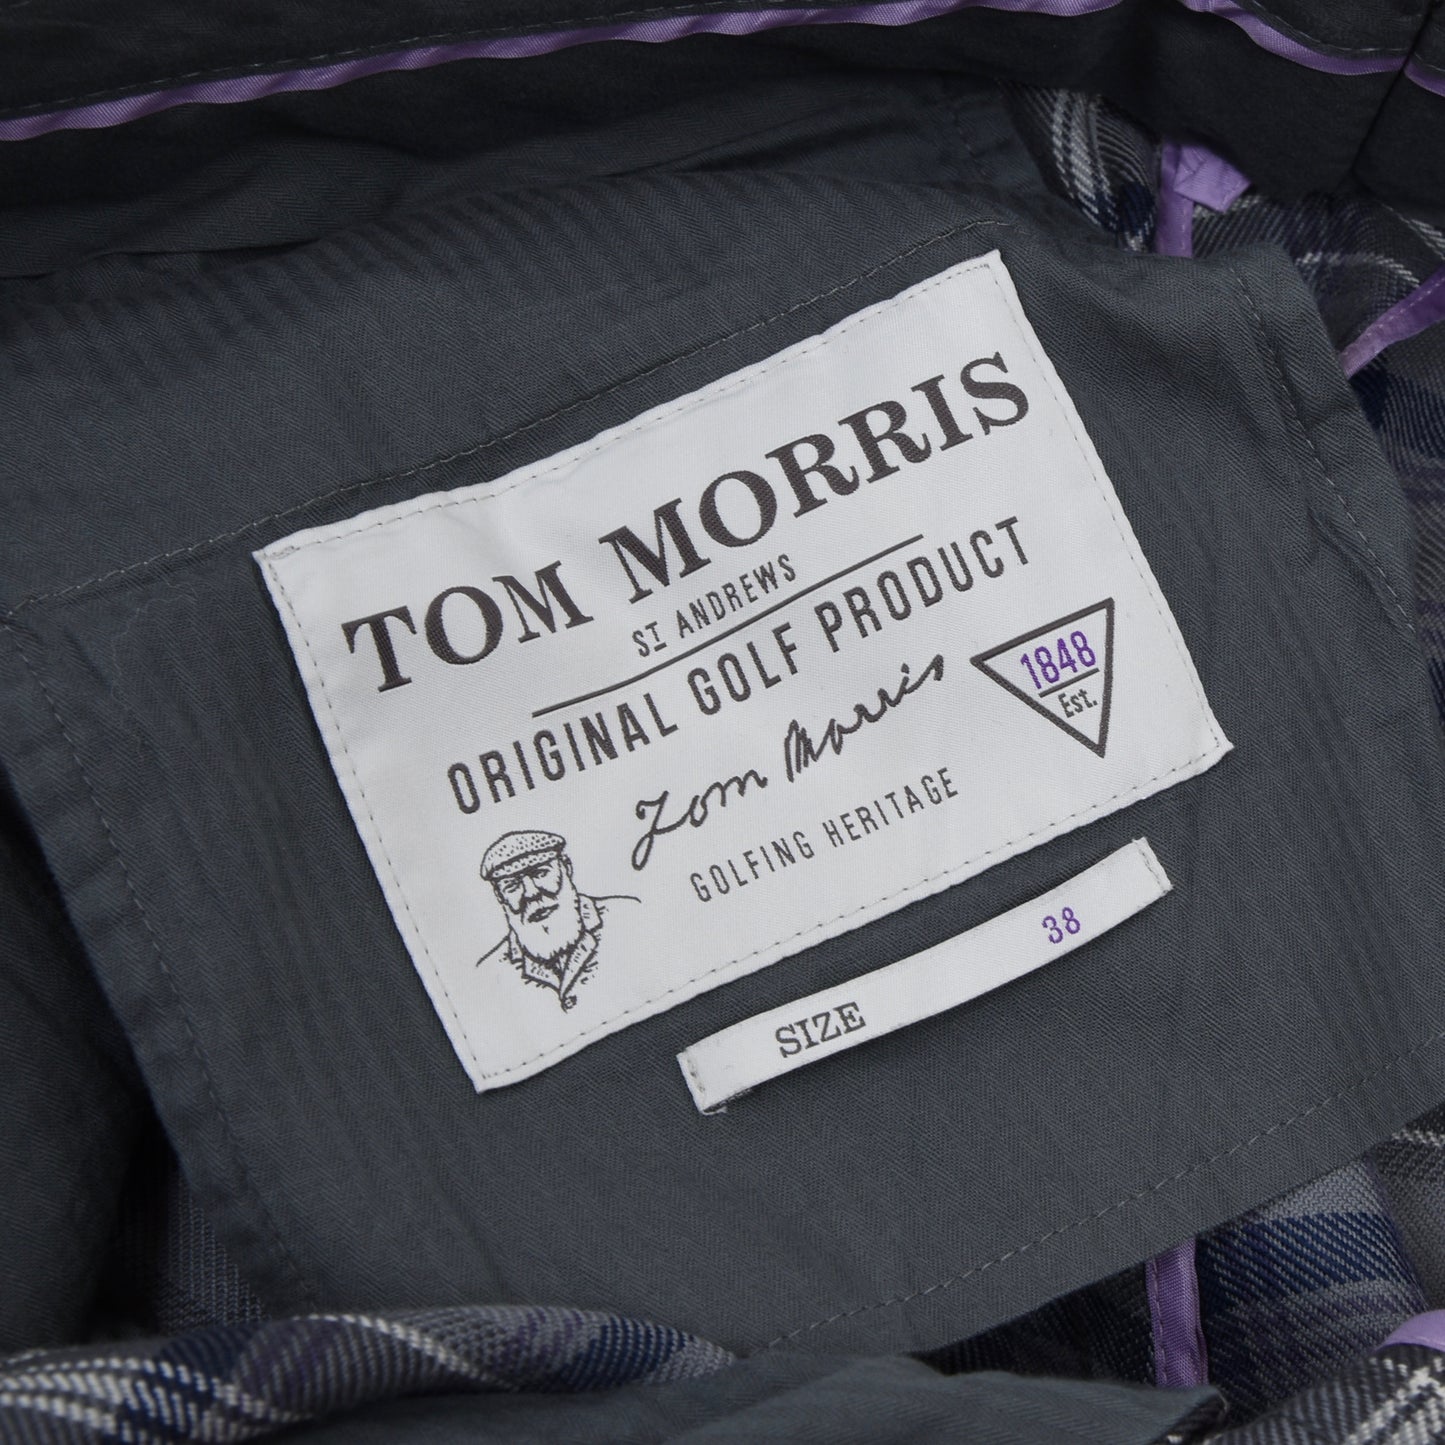 Tom Morris 100% Wool golf Pants Size W38 - Plaid